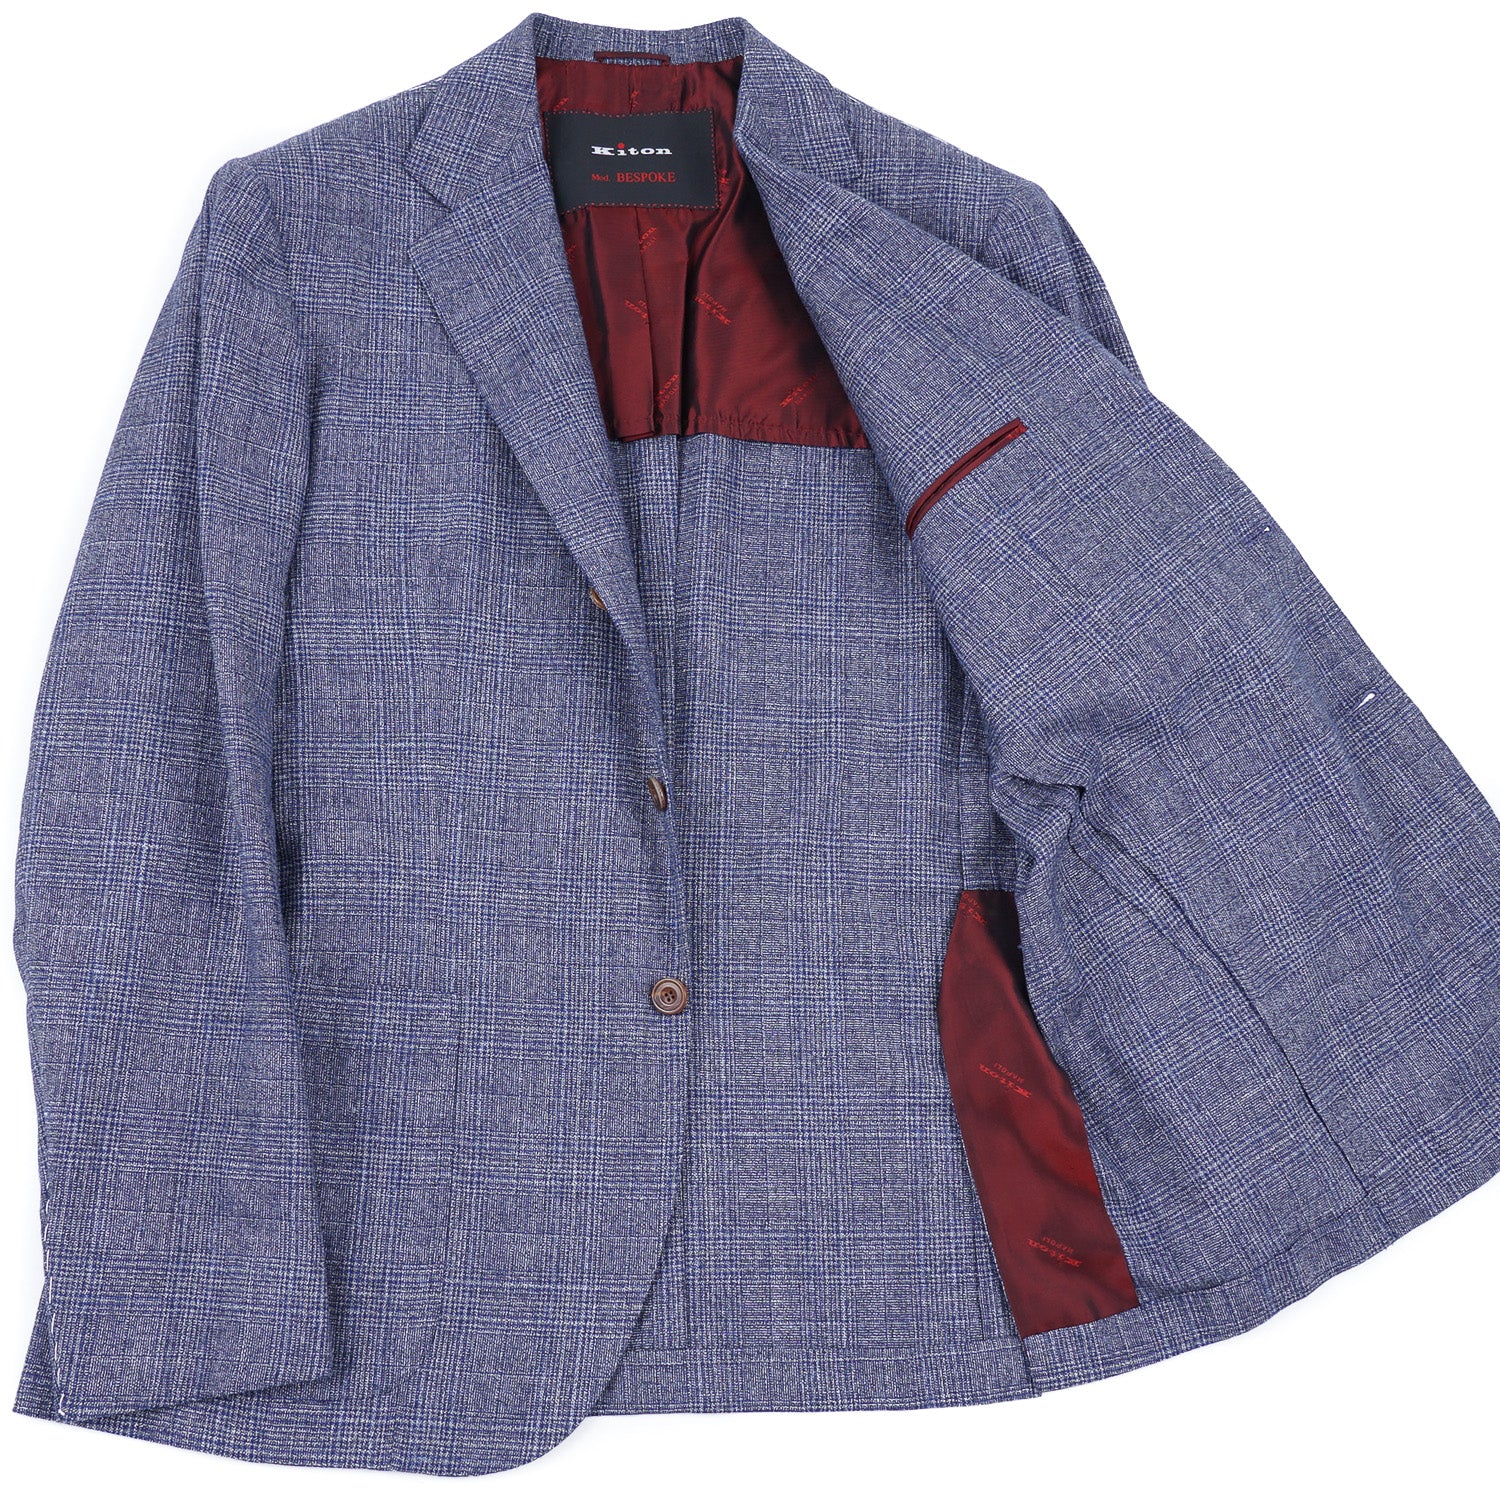 Kiton Cashmere Silk and Linen Suit - Top Shelf Apparel